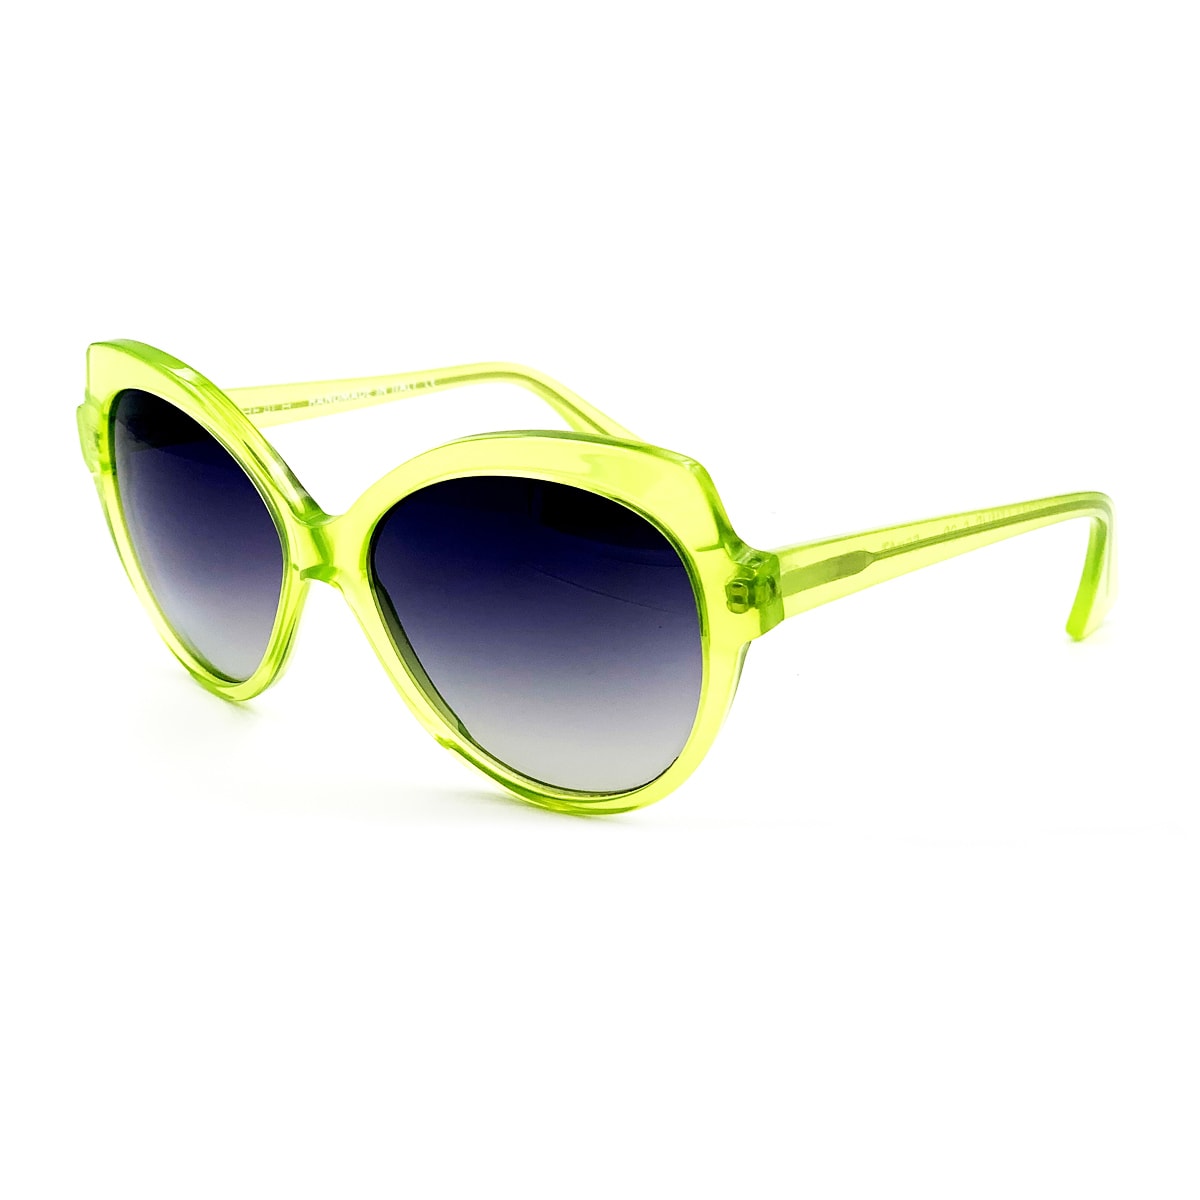 Silvian Heach Cosmopolitan/s Sunglasses In Green